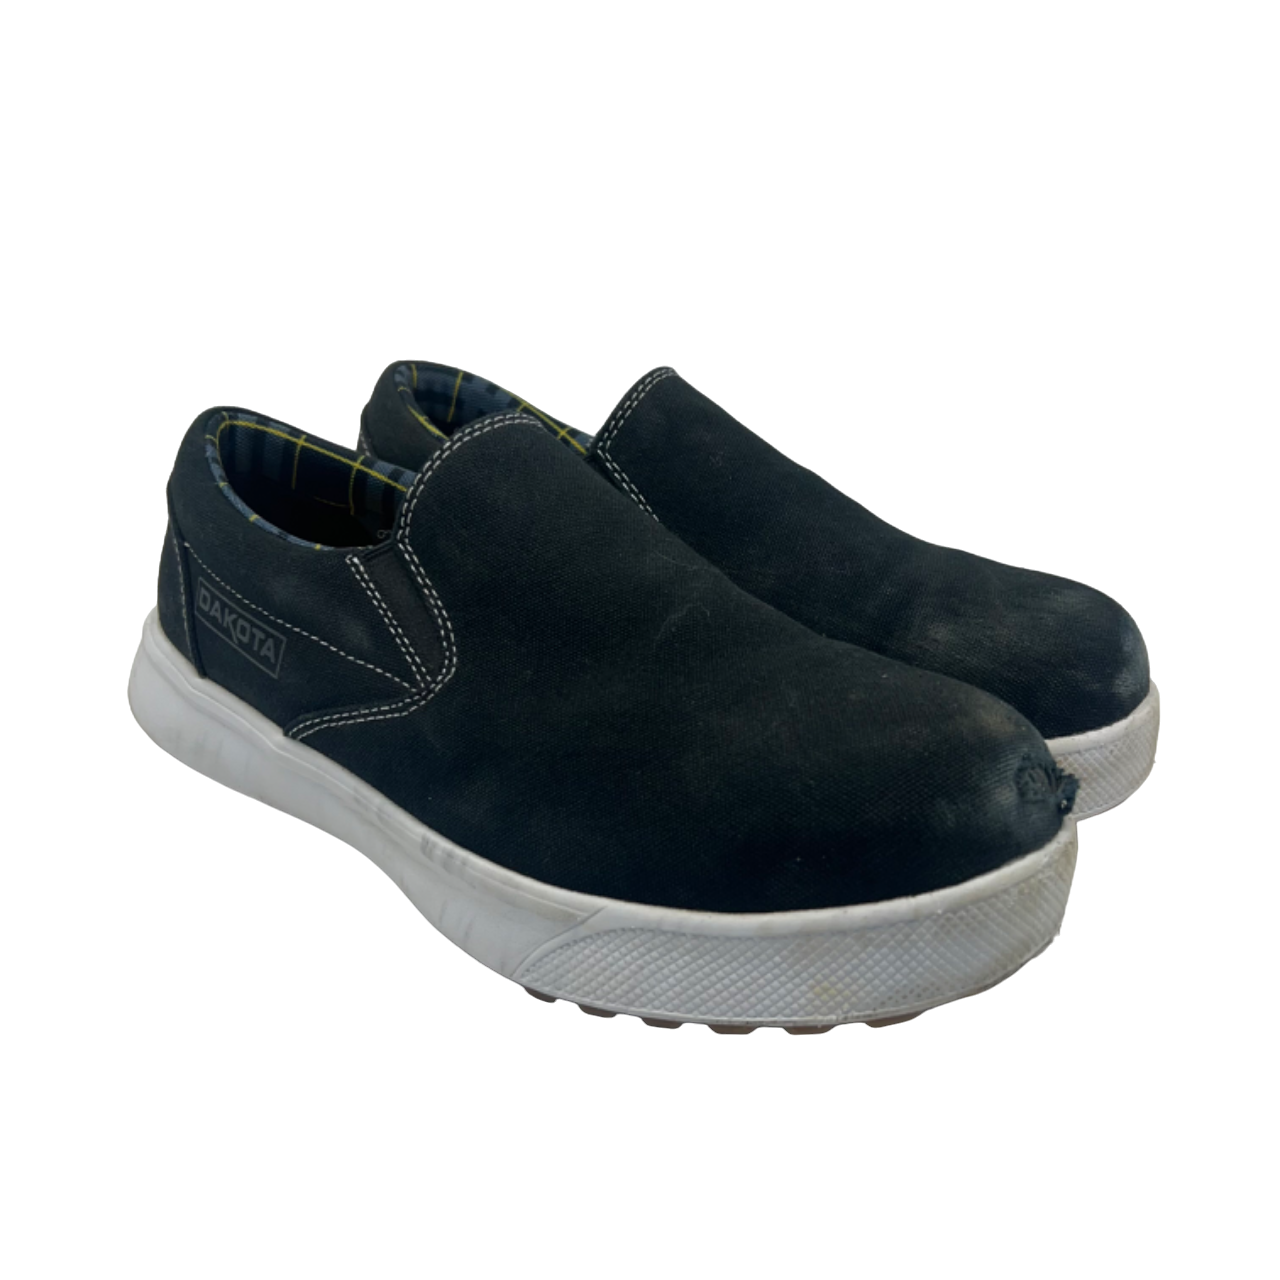 Primary image for Dakota Men's Slip-On Steel Toe Steel Plate Canvas Work Shoes 3831 Black Size 11M